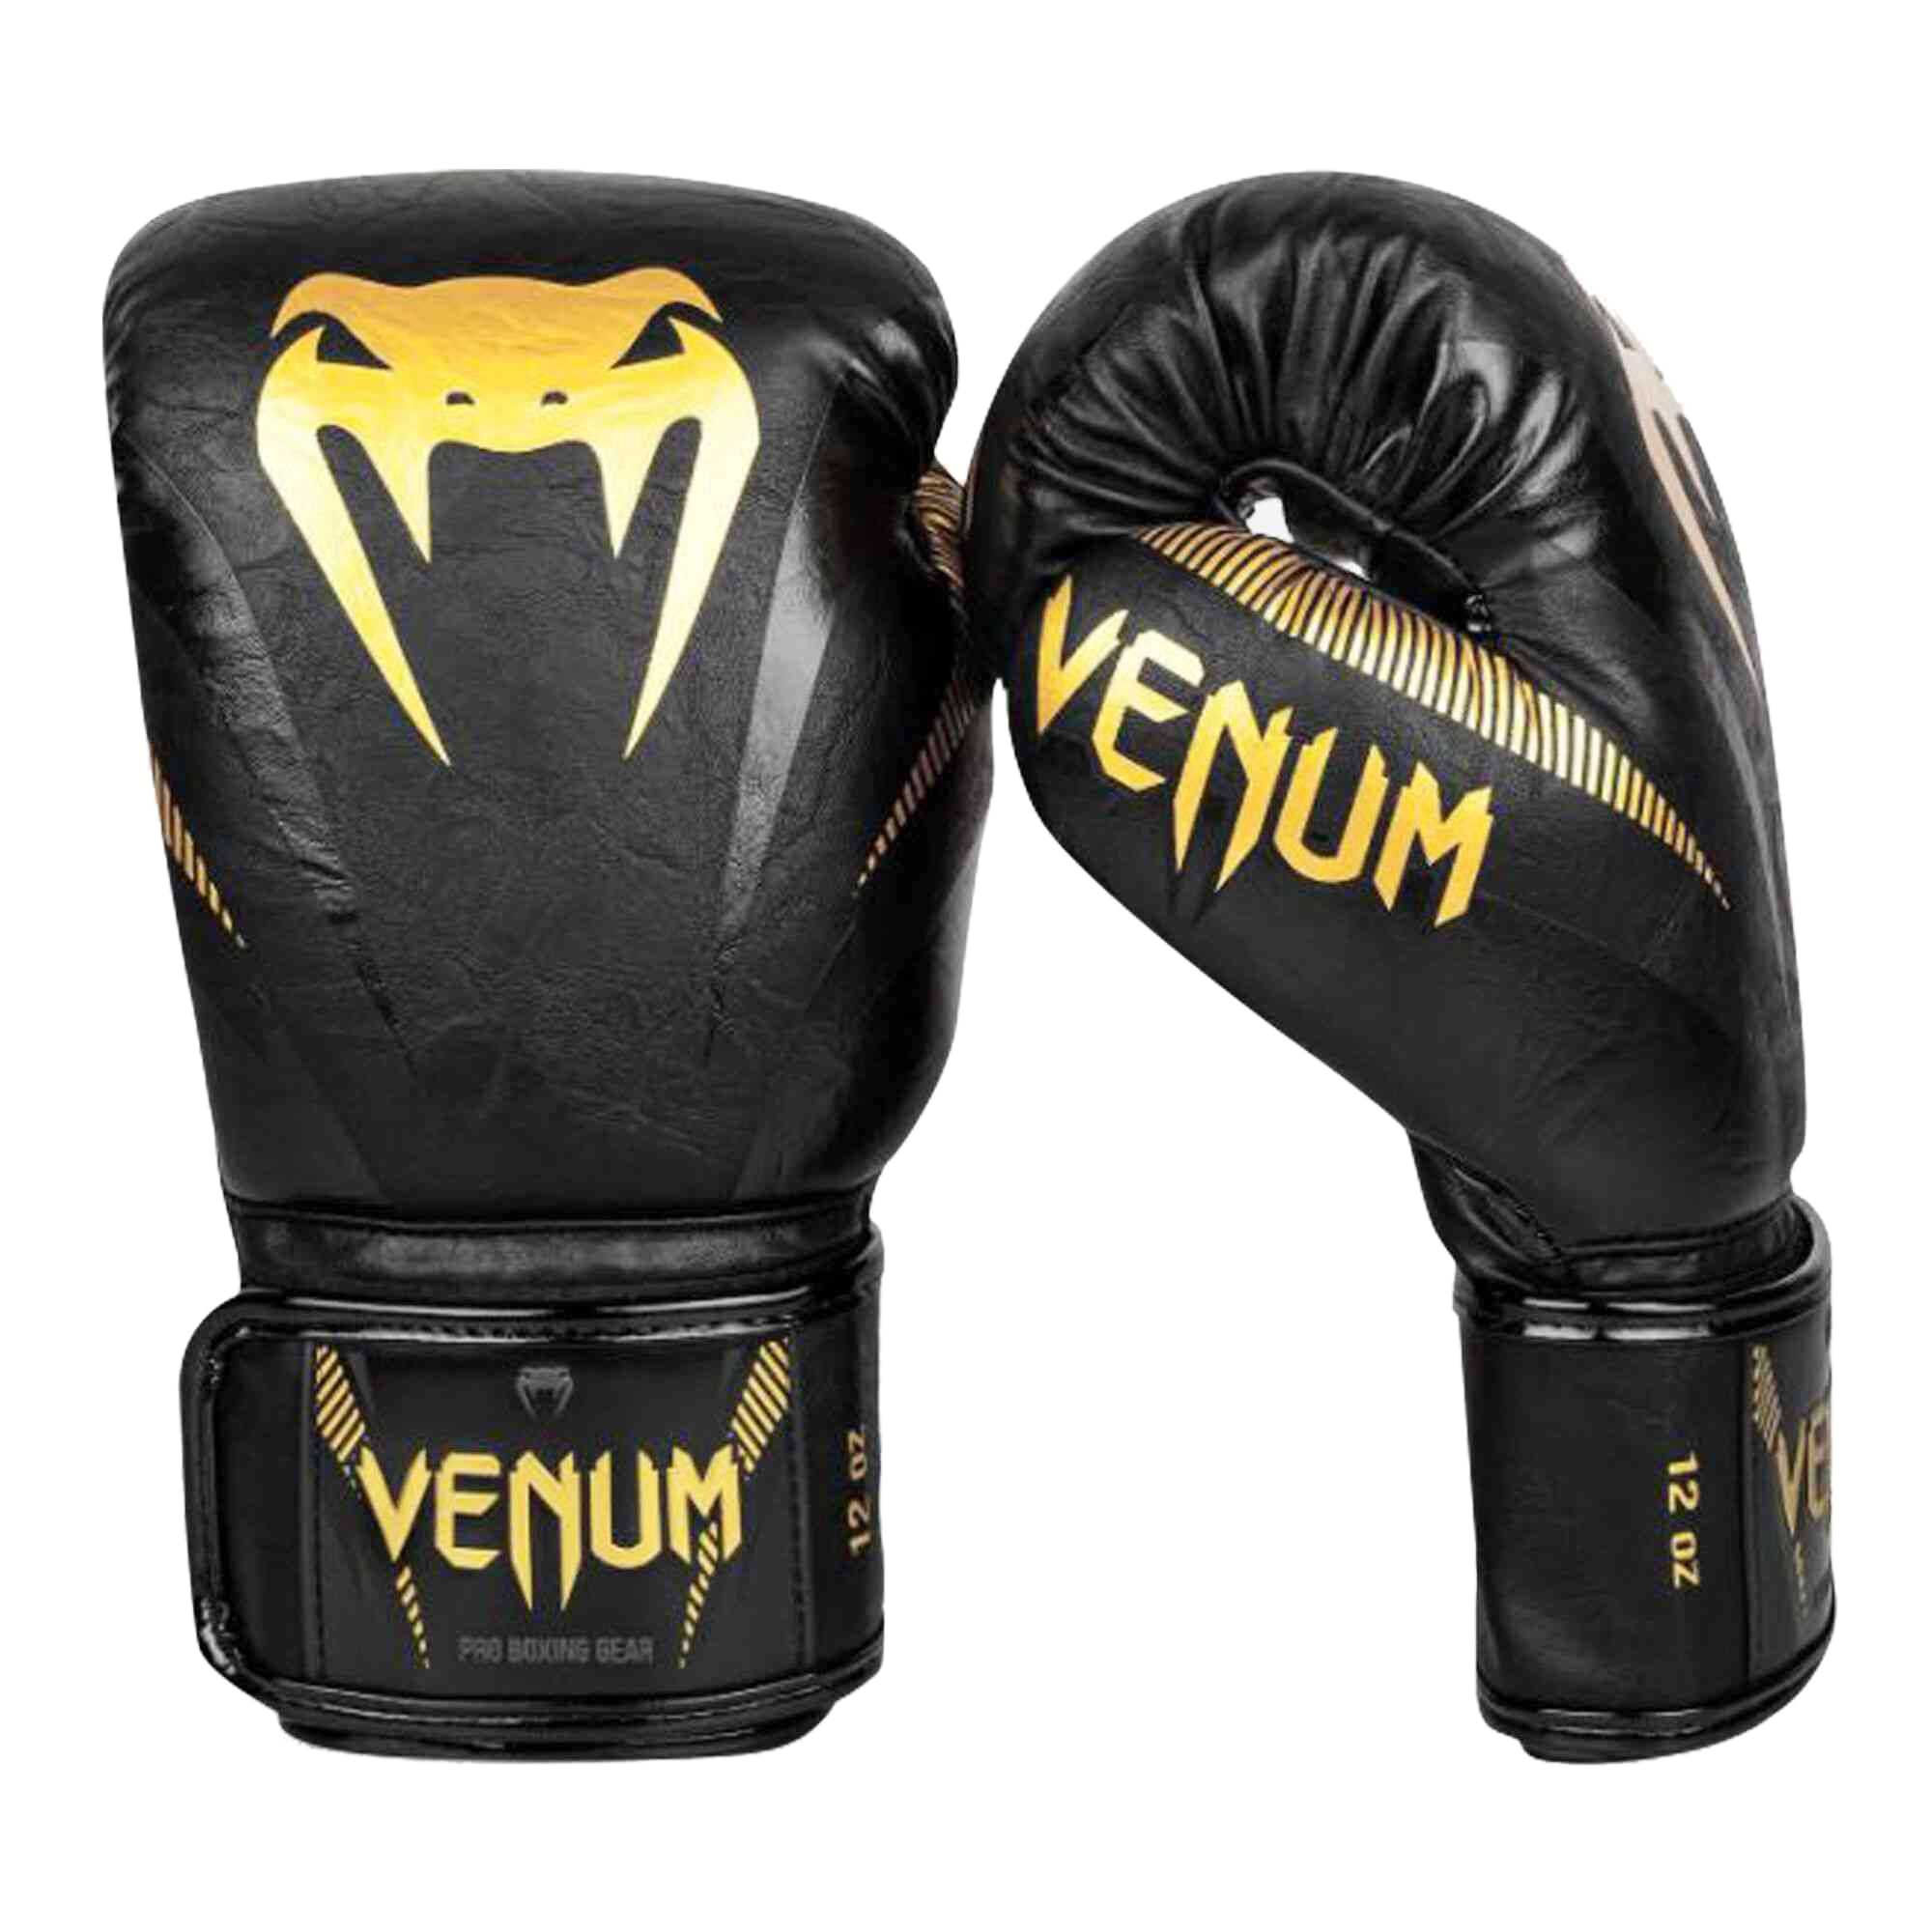 Venum 12 Oz Impact Boxing Gloves, Black/Gold